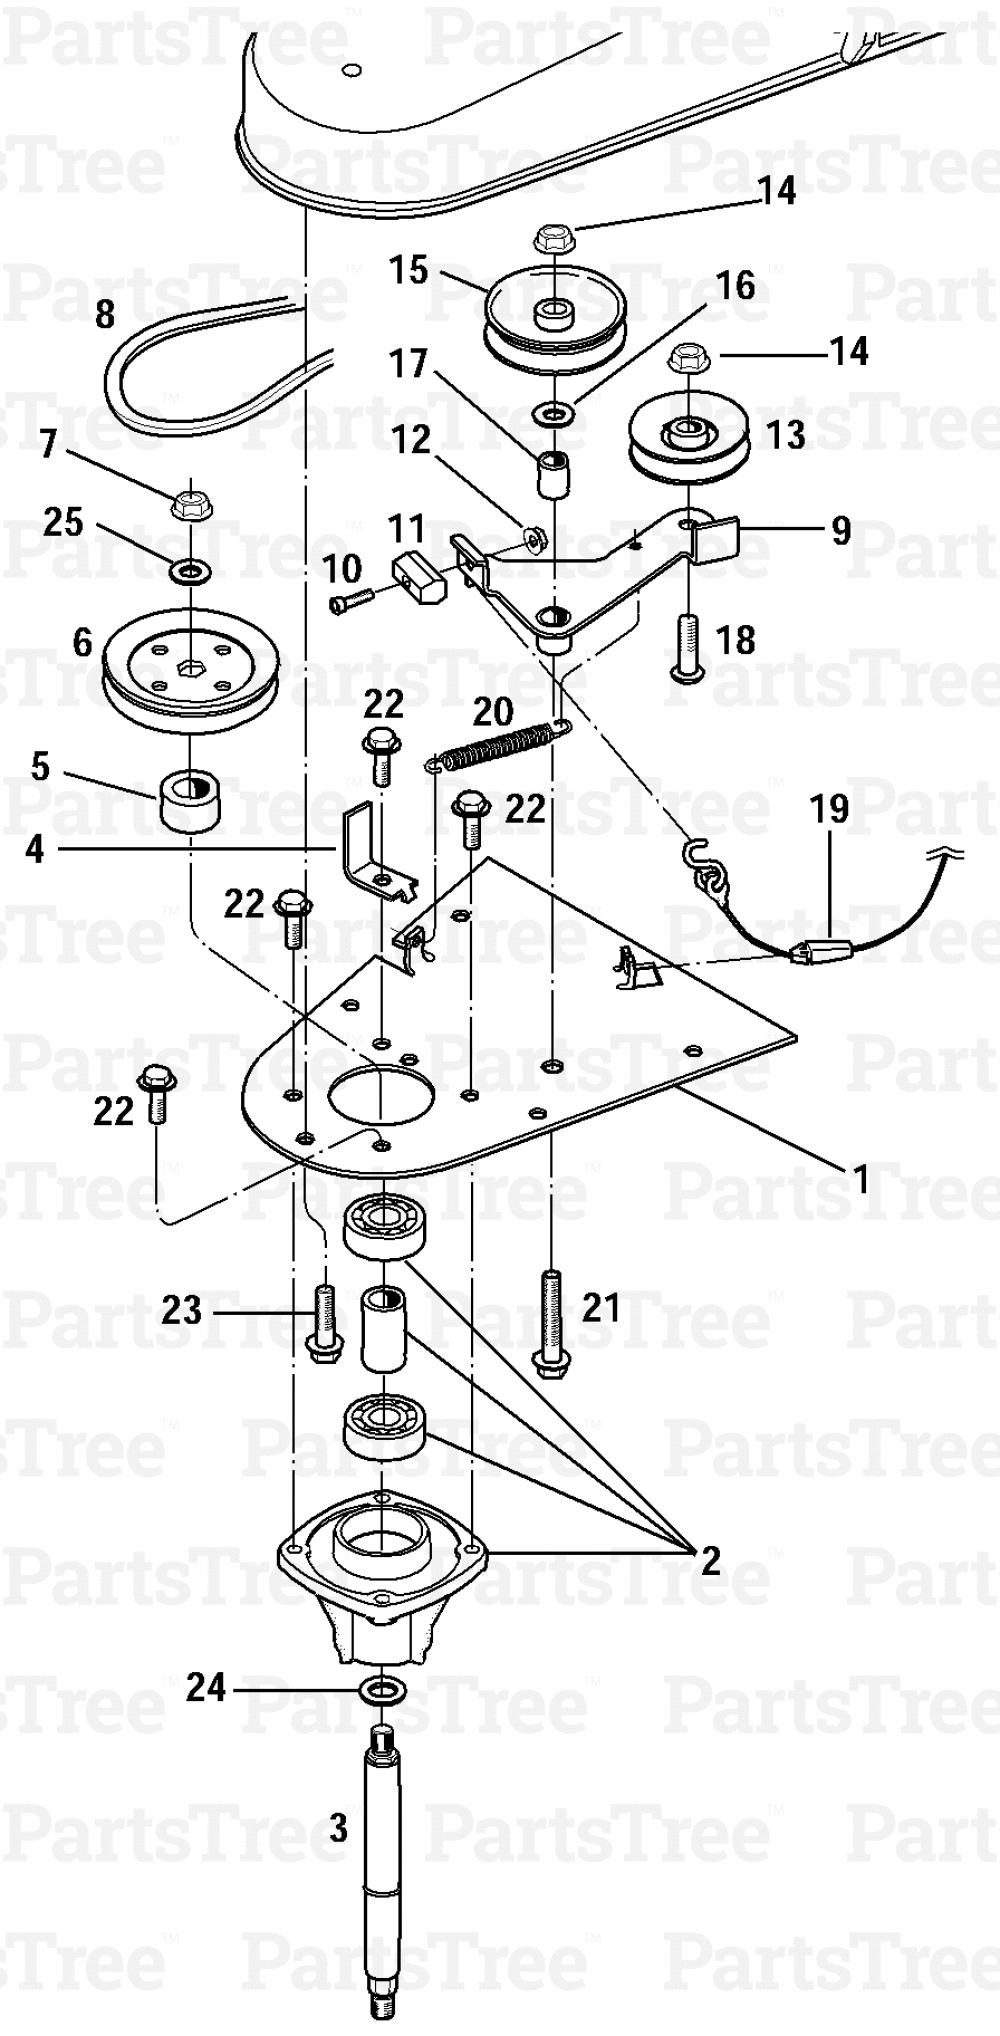 Troy Bilt Lawn Mower Engine Diagram Troy Bilt Trimmer Mower Spindle Plate assembly Diagram and Of Troy Bilt Lawn Mower Engine Diagram